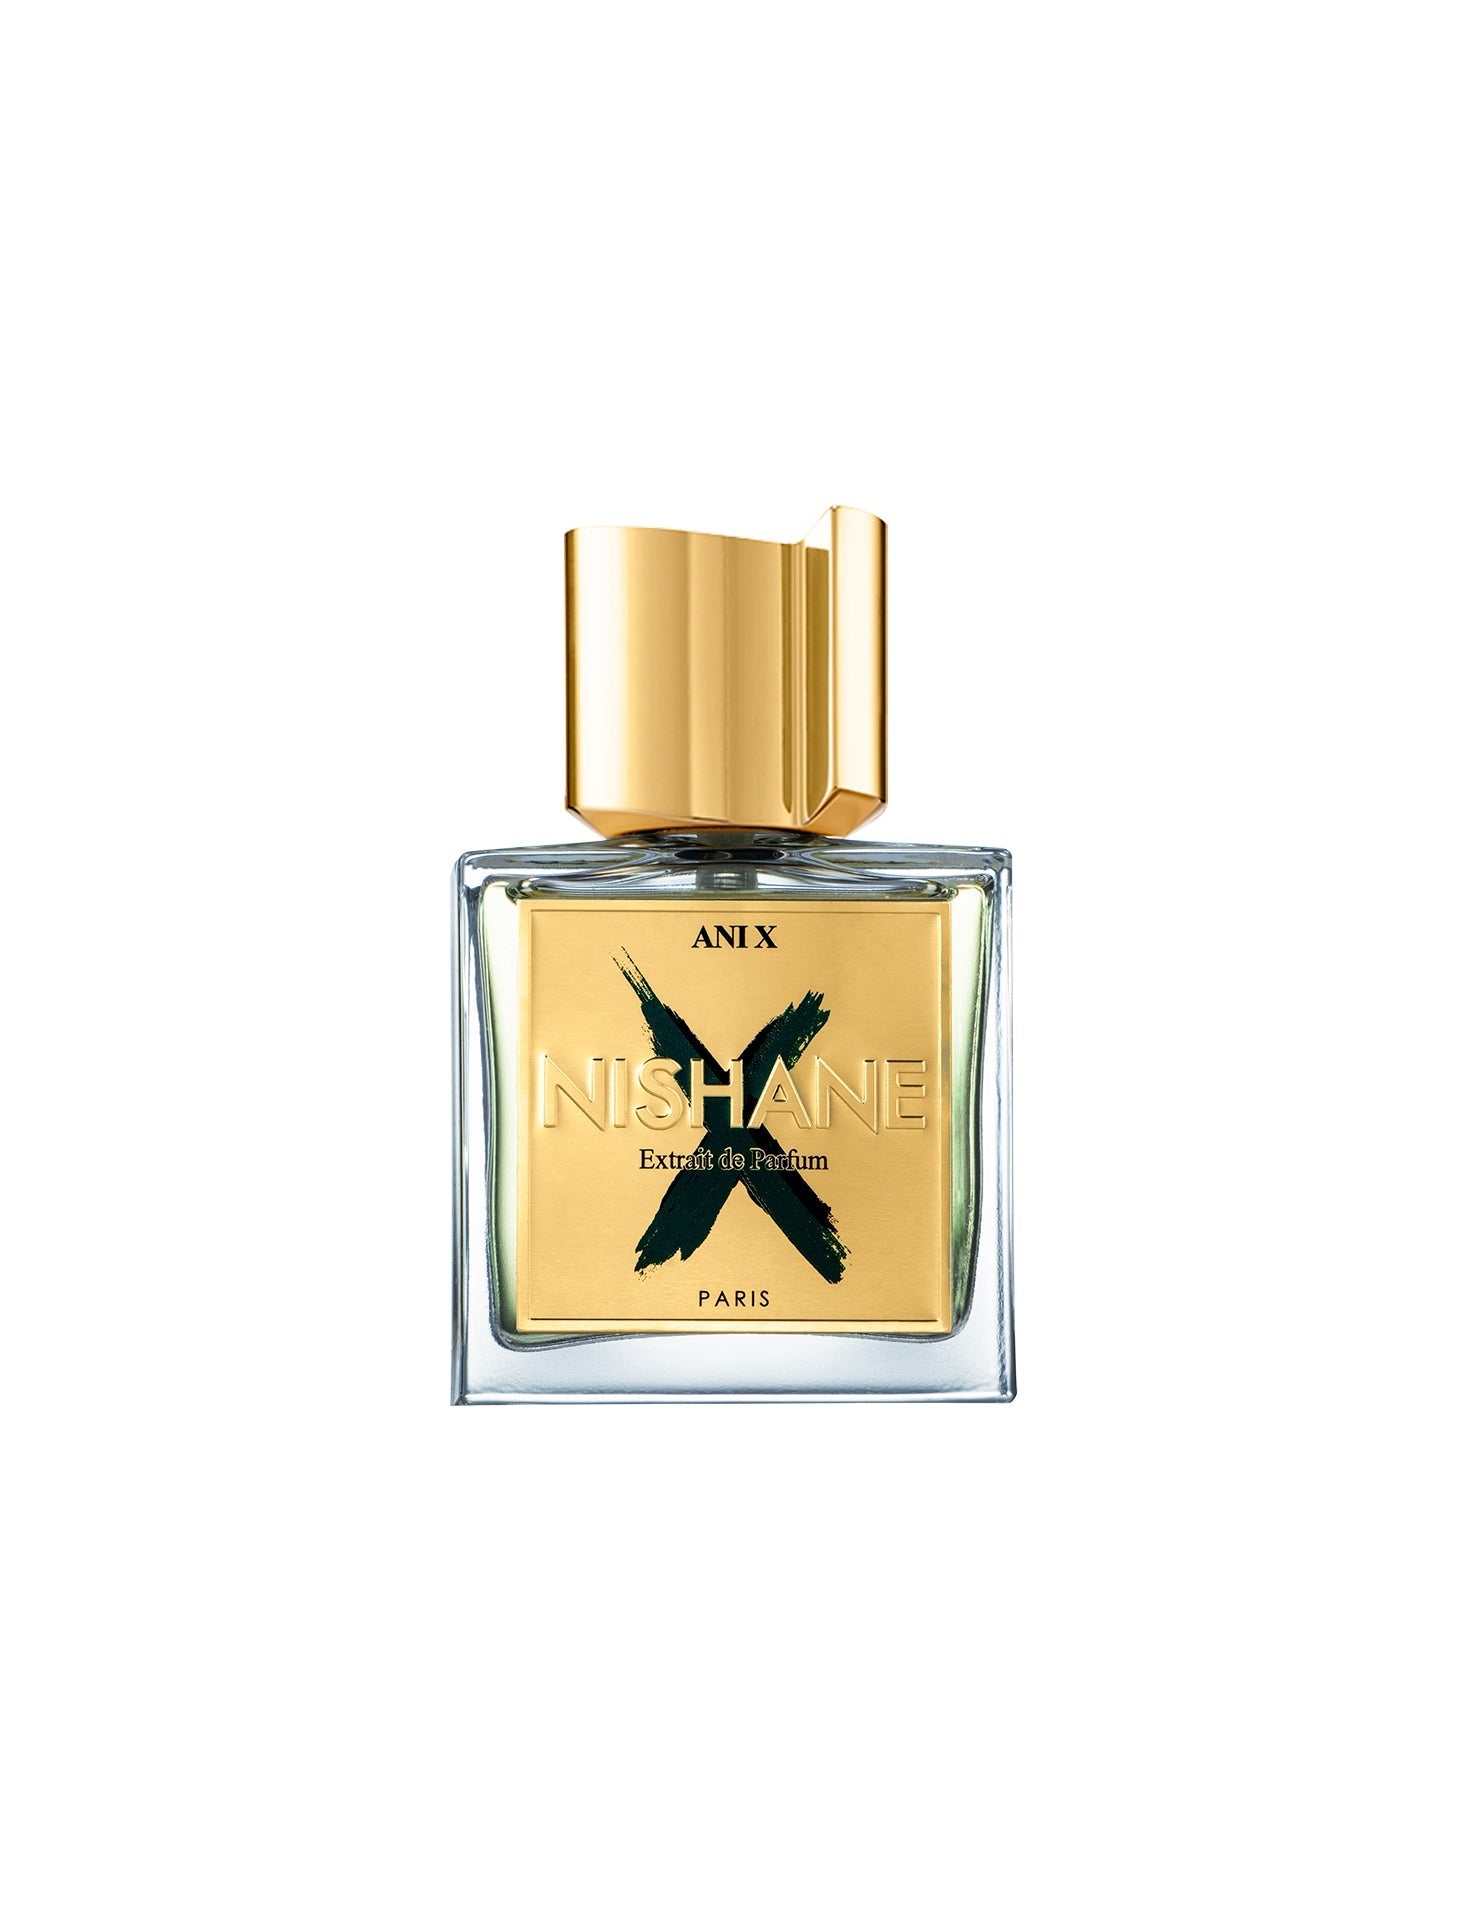 Ani X Nishane Extrait de Parfum - TUXEDO.NO - OSLO NORWAY - ON DEMAND BARBERS - NICHE PERFUMES